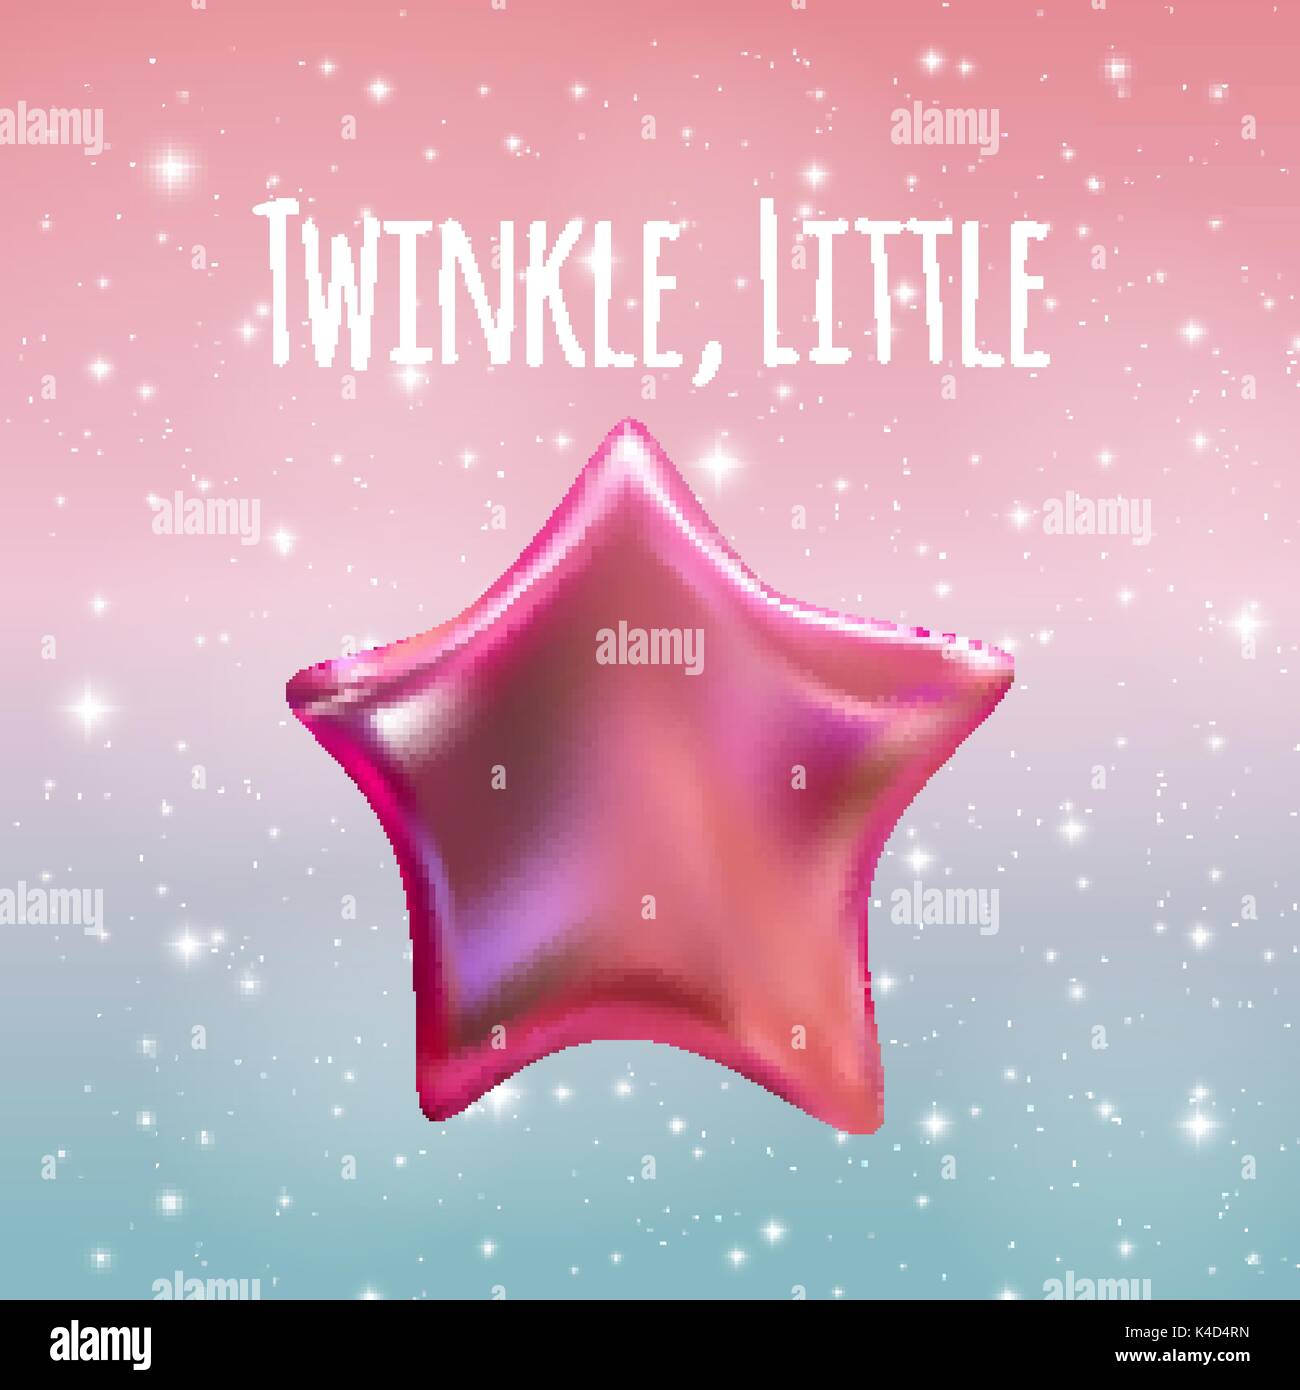 Twinkle Little Star on Night Sky Background. Vector illustration Stock Vector